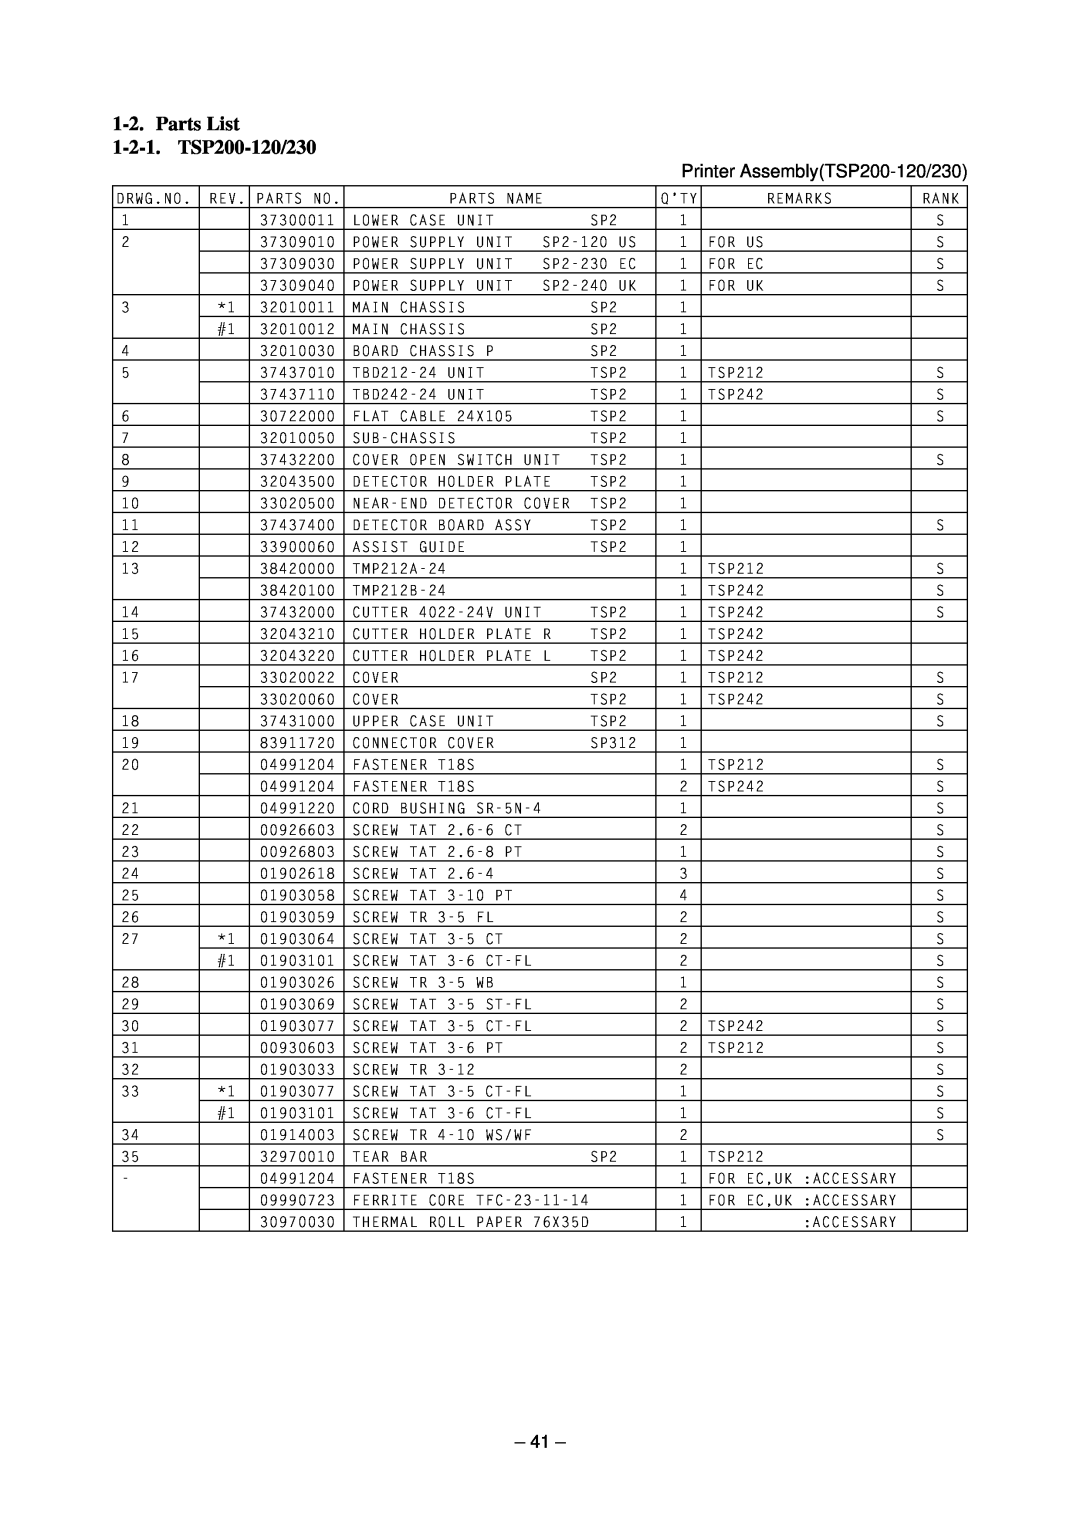 Star Micronics technical manual Parts List 1-2-1. TSP200-120/230, Printer AssemblyTSP200-120/230 